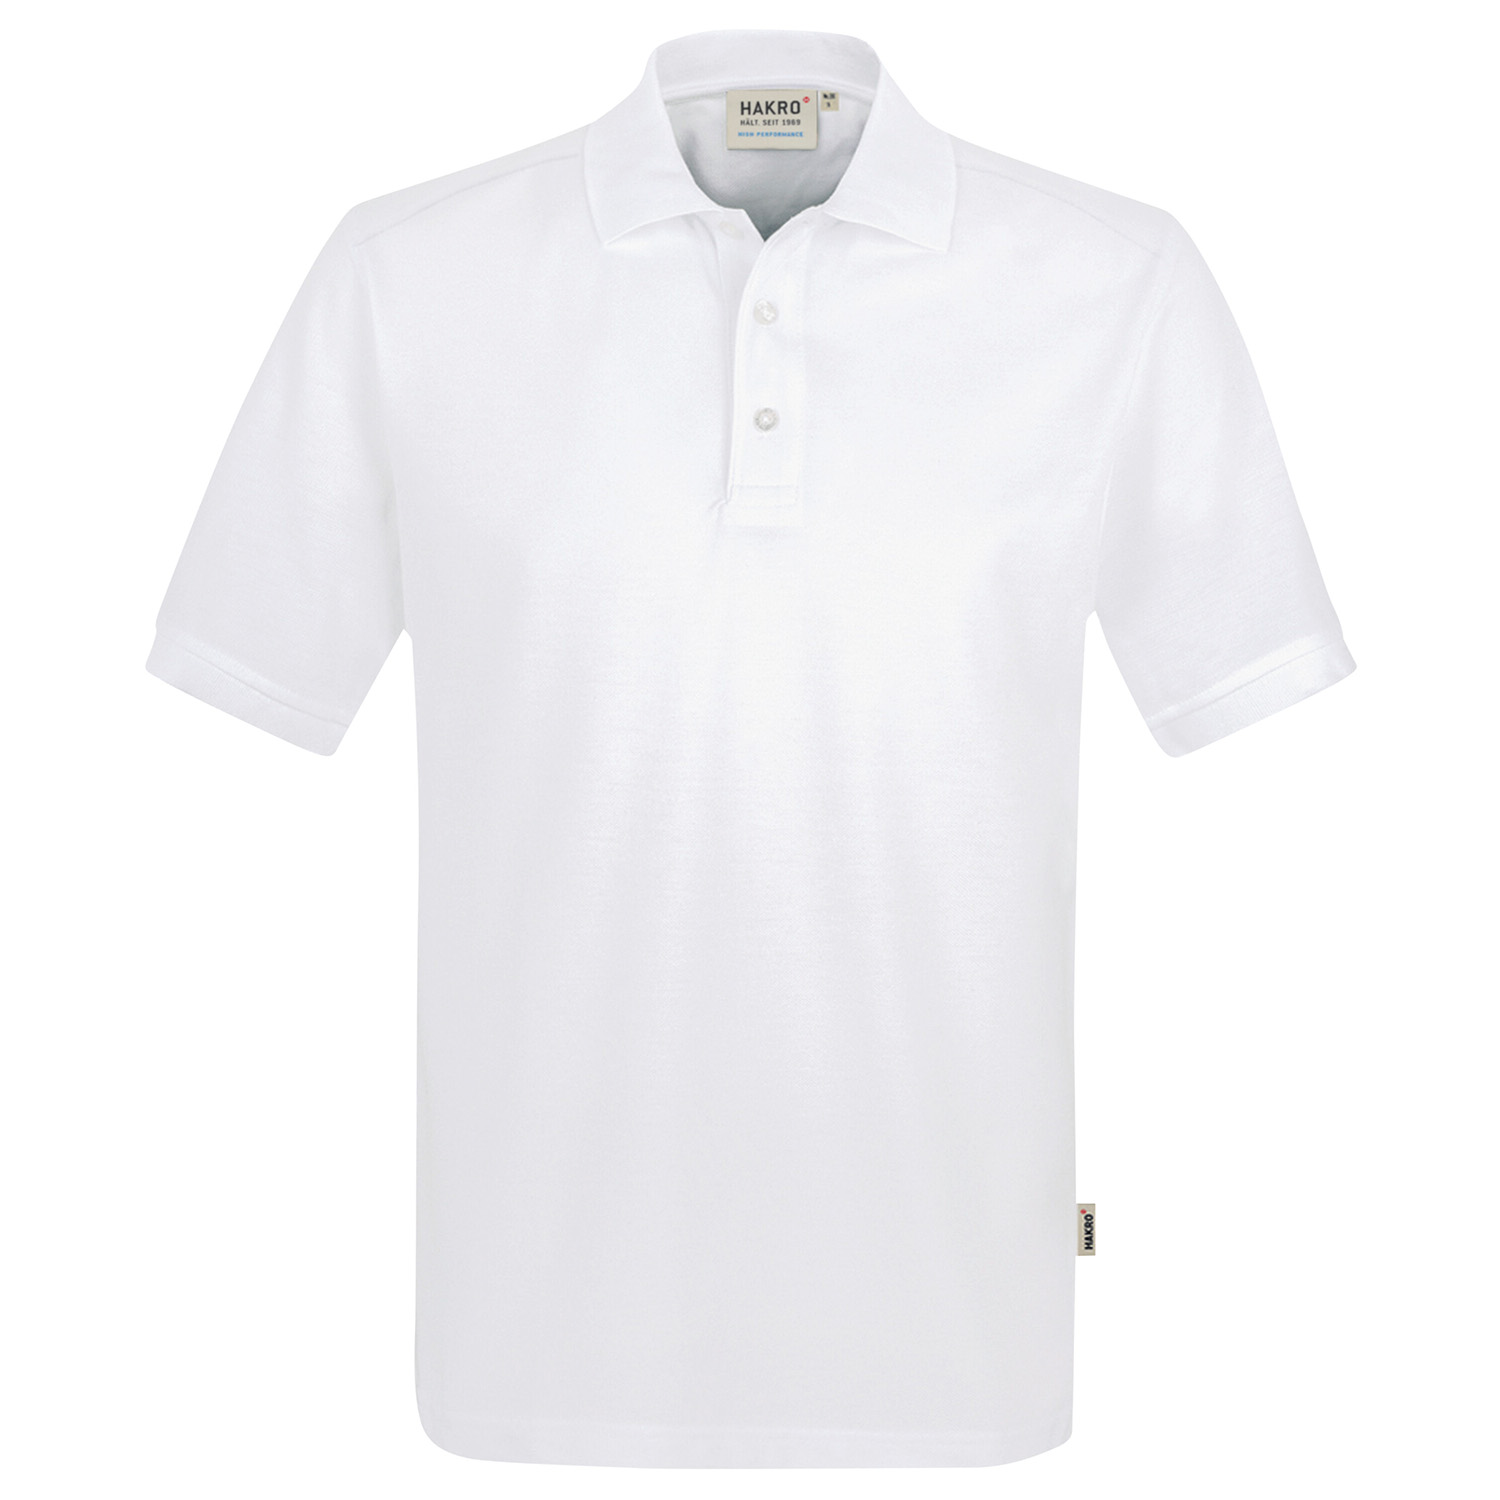 Unisex-Poloshirt High Performance, Kurzarm, weiß